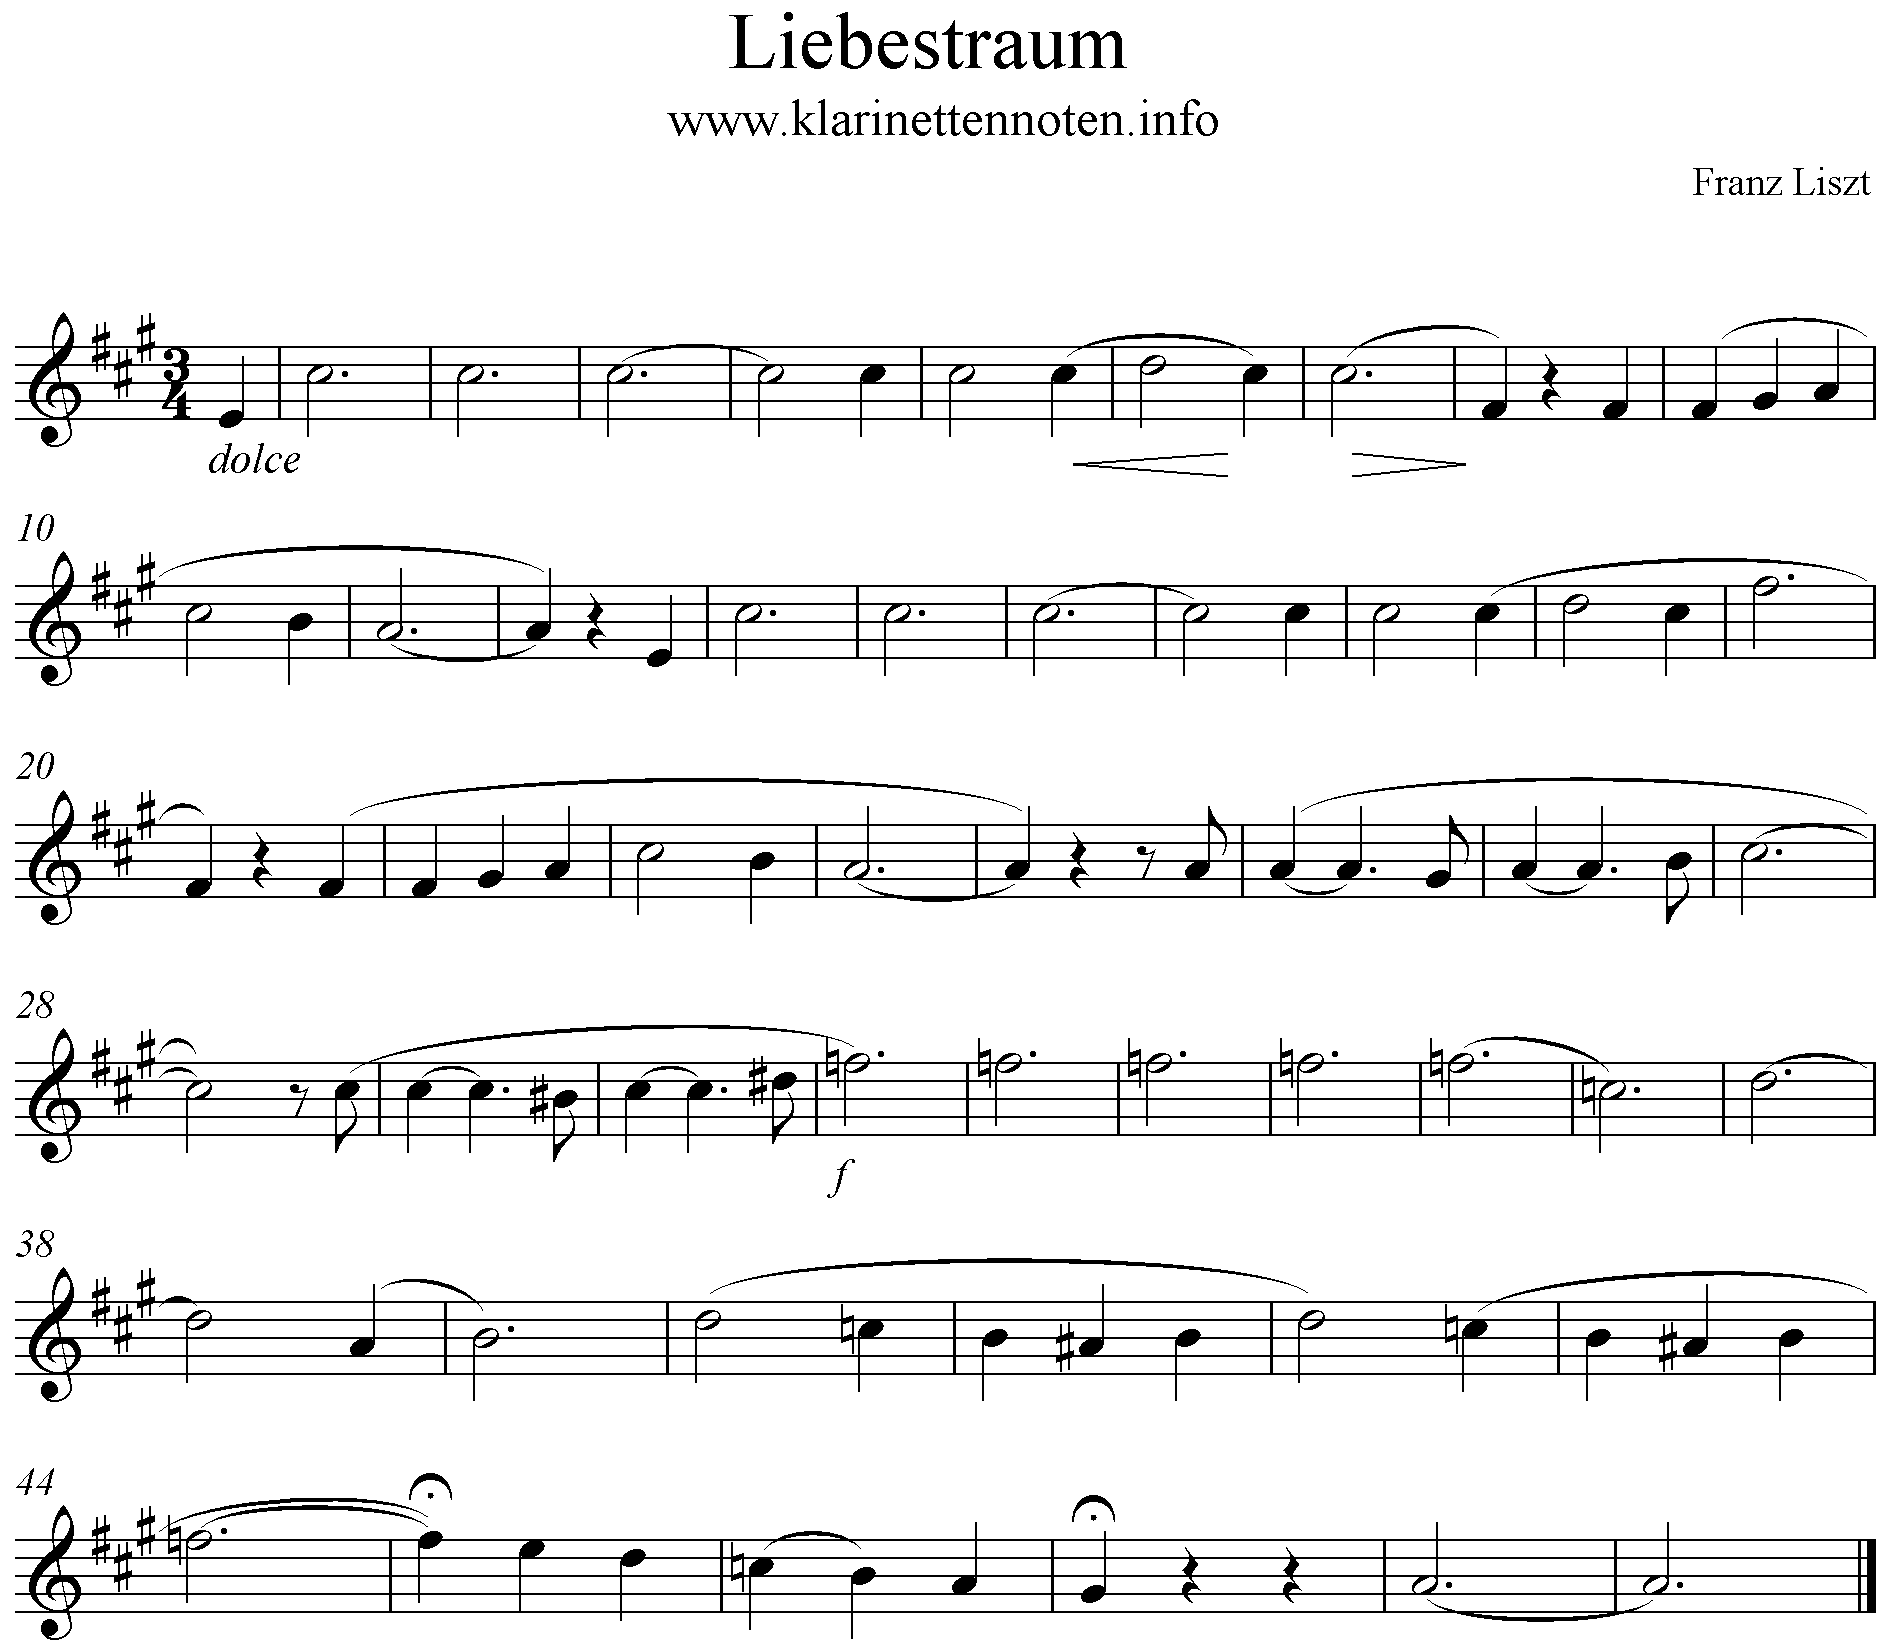  Noten Liebestraum Franz Liszt